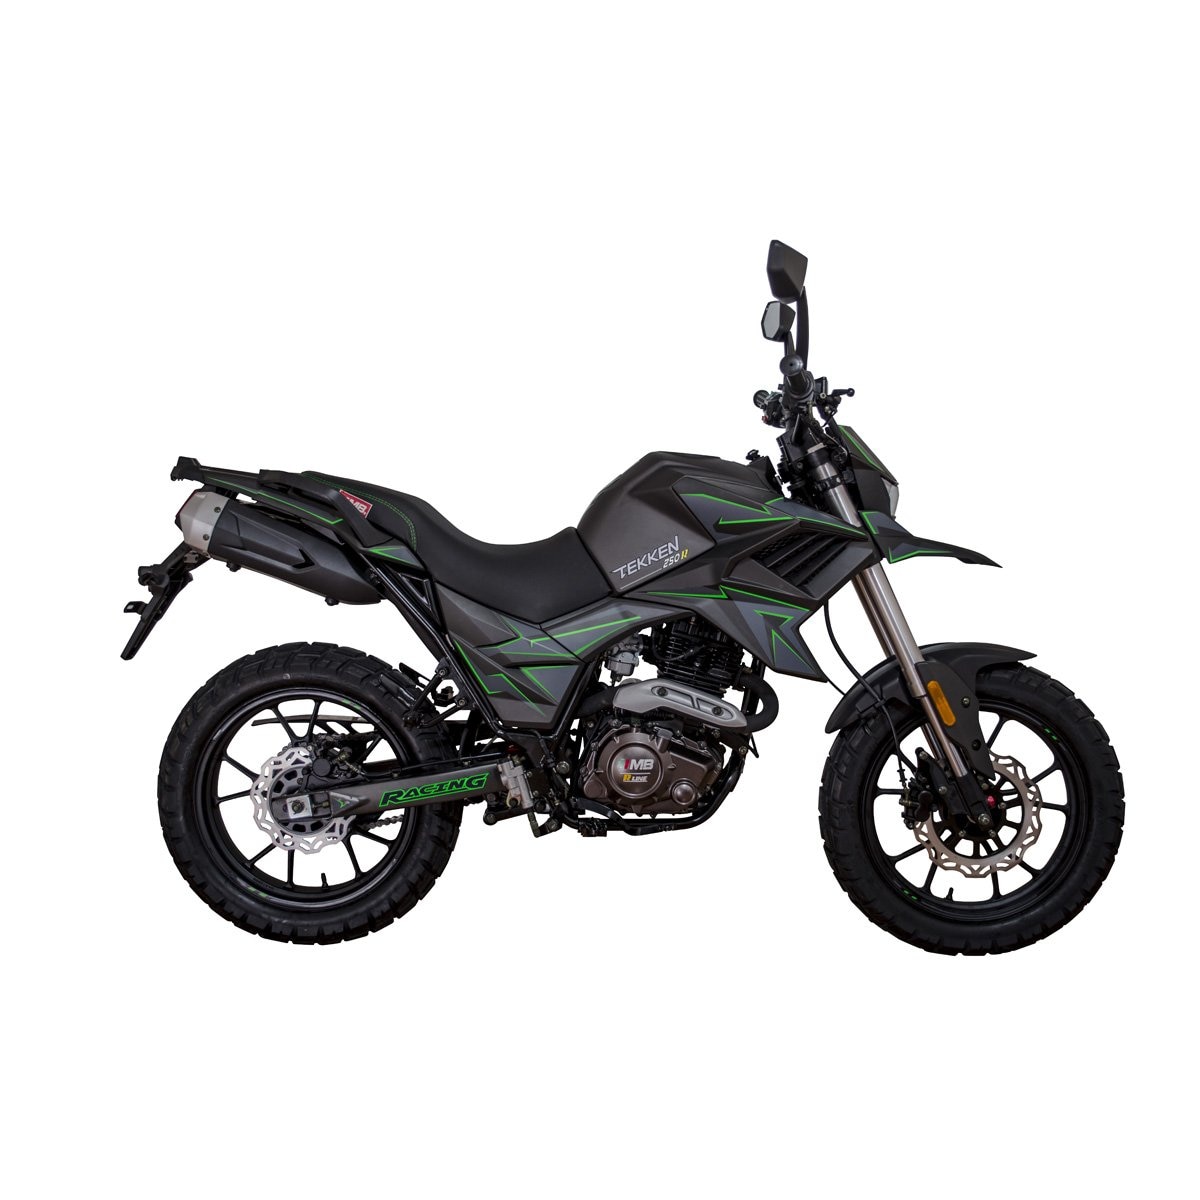 Motocicleta tekken r line 250cc 2020 mb Sears